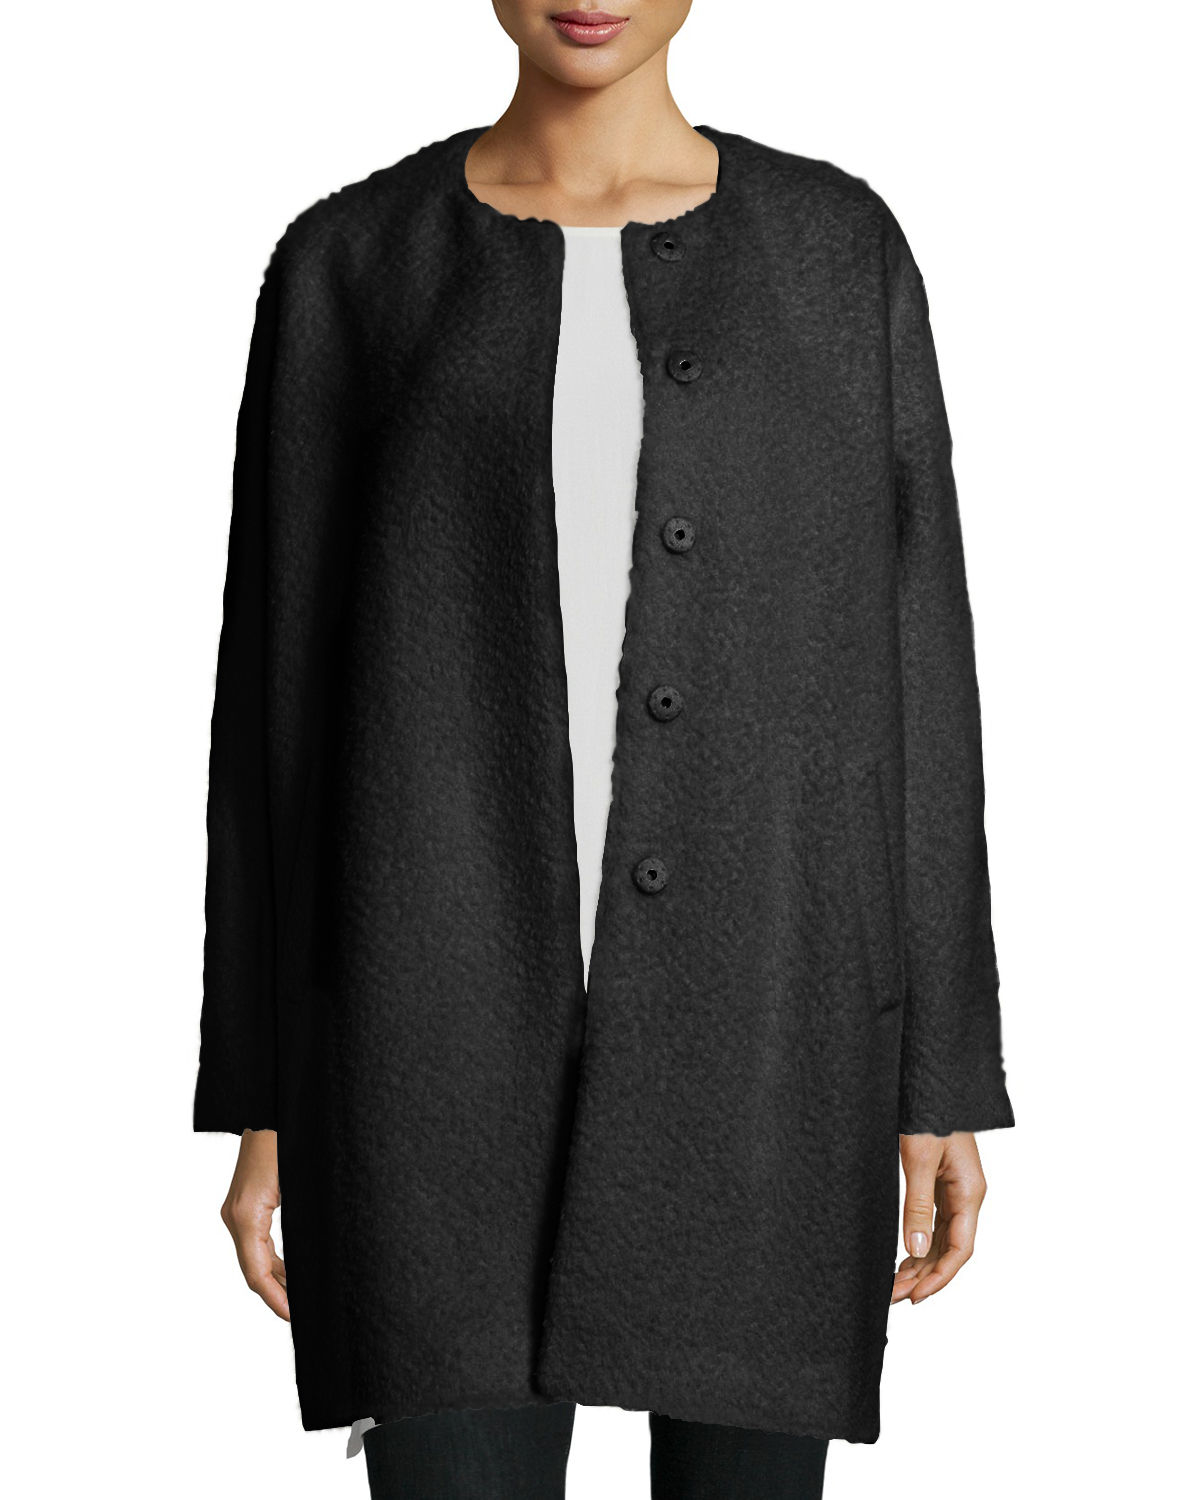 Lyst - Eileen Fisher Fisher Project Alpaca-blend Cocoon Coat in Black